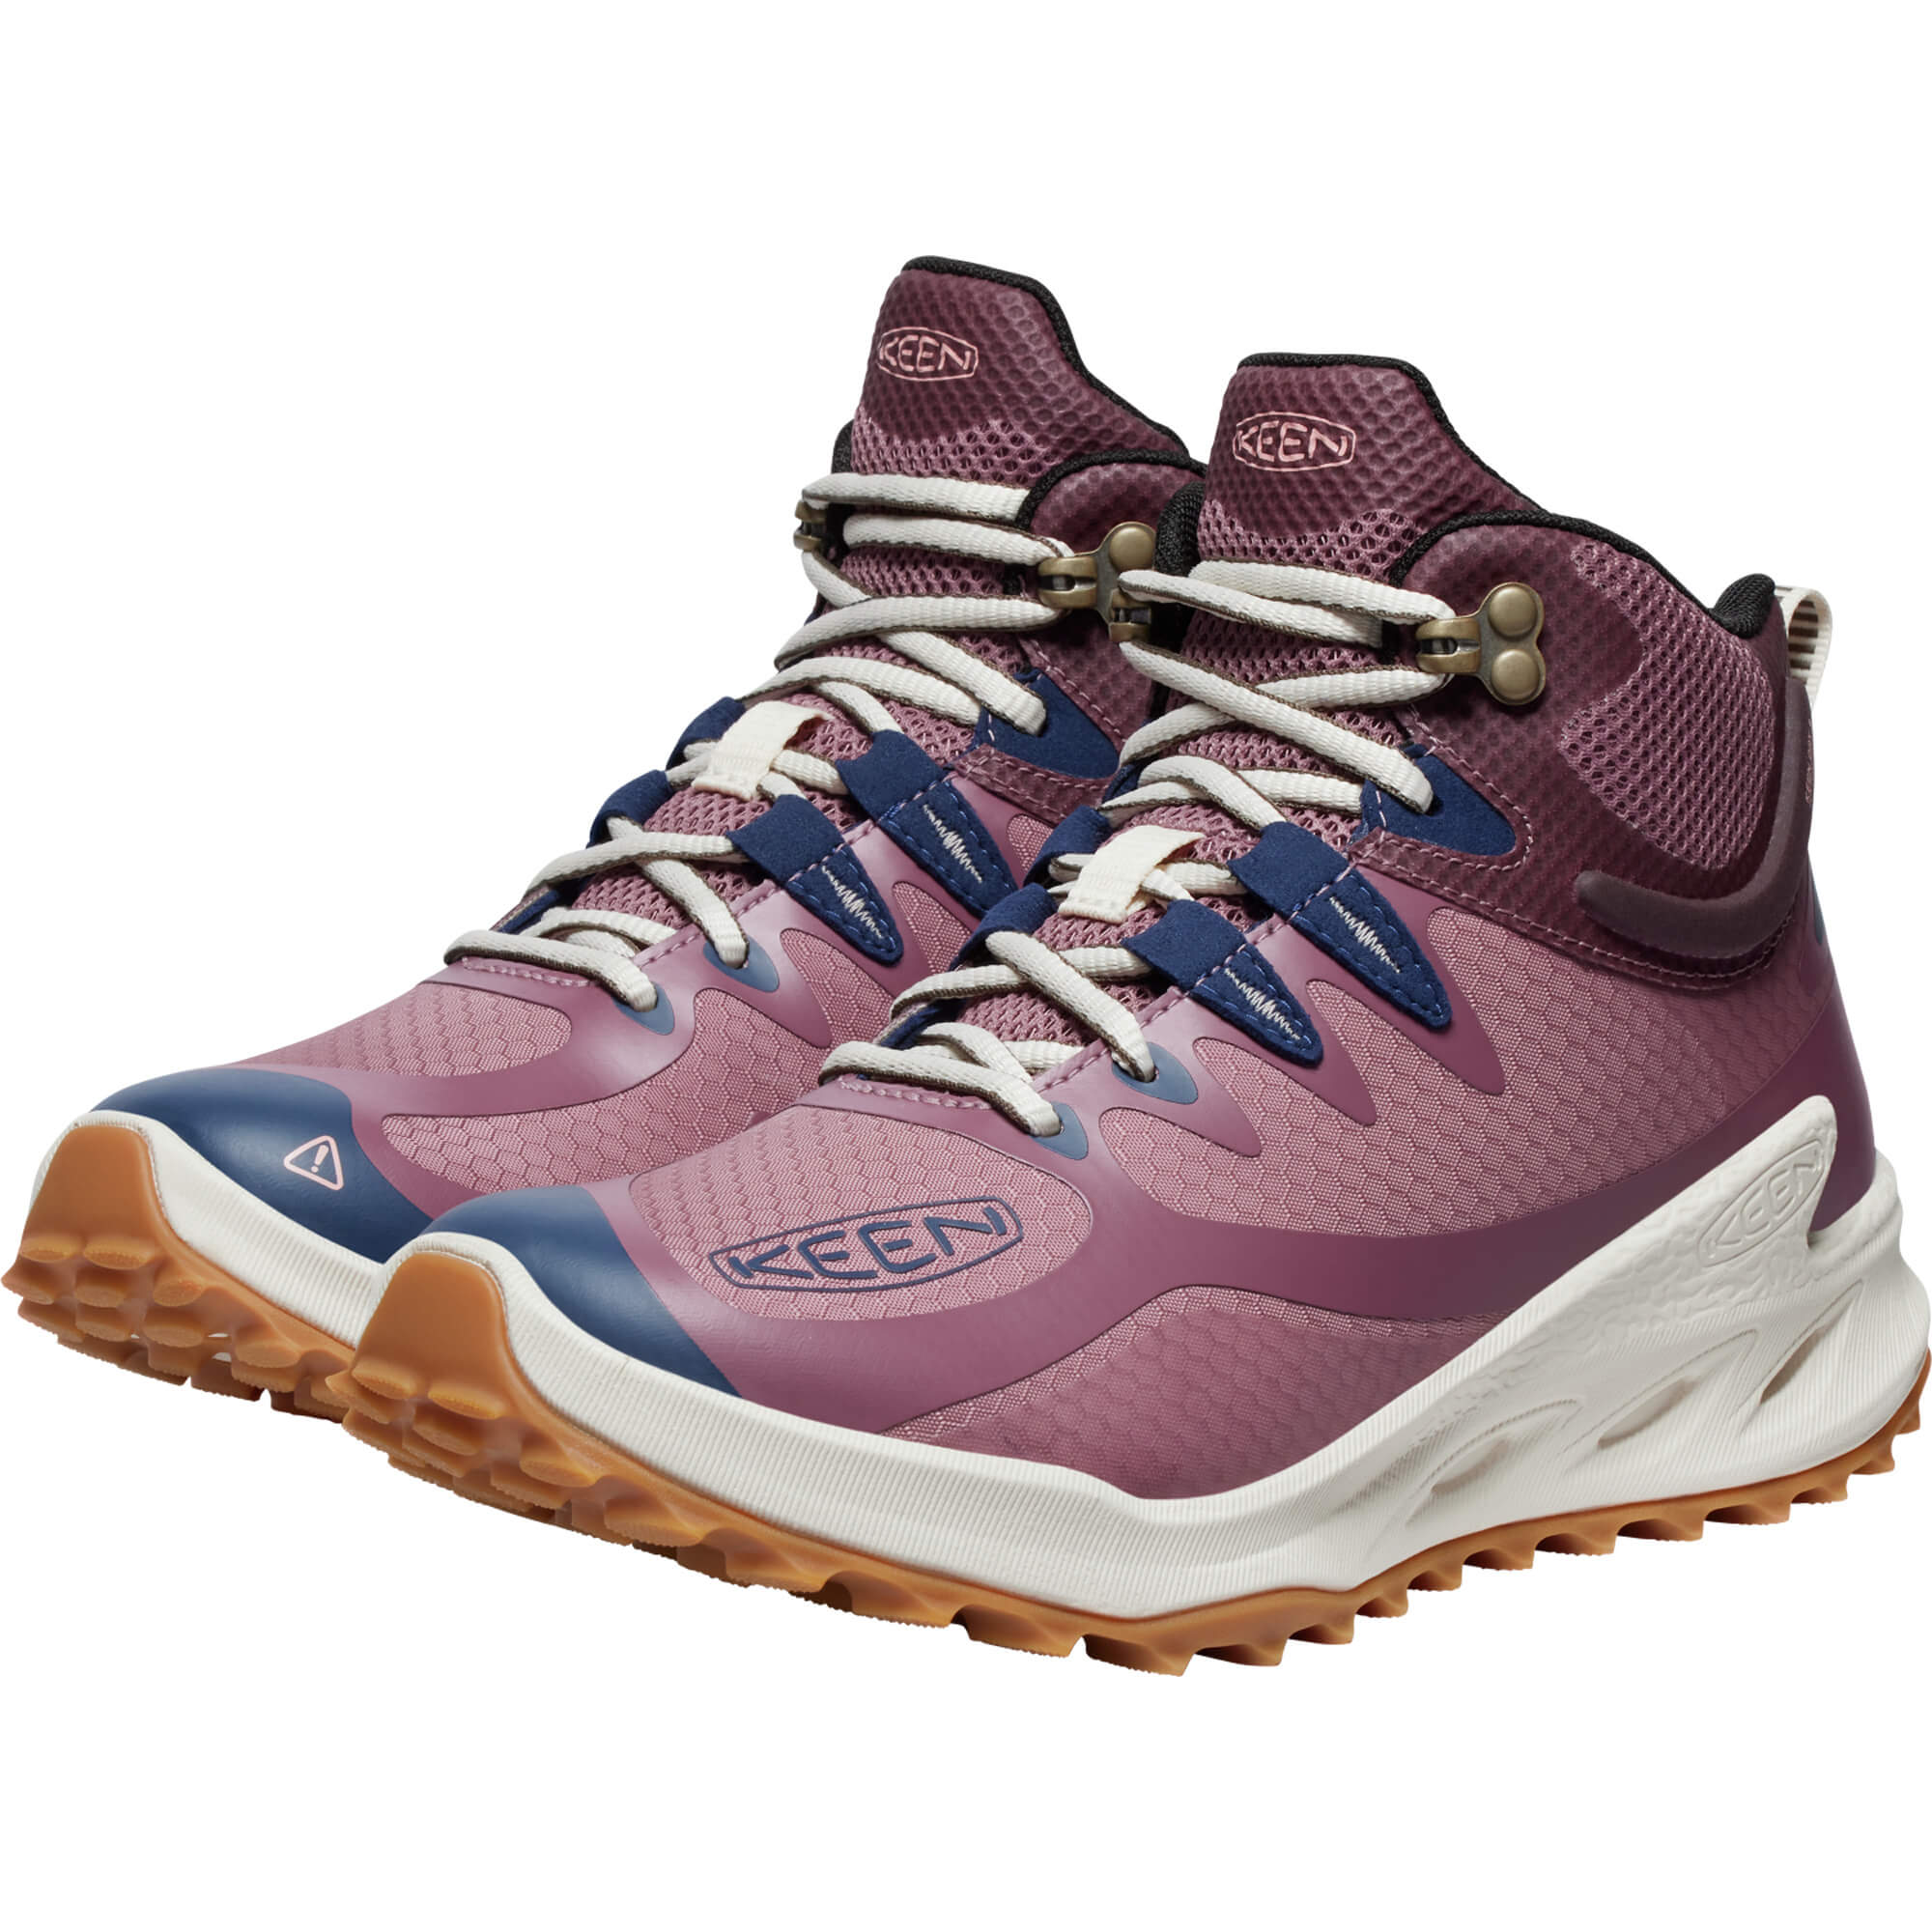 Keen Zionic Mid Waterproof Women's Hiking Boots